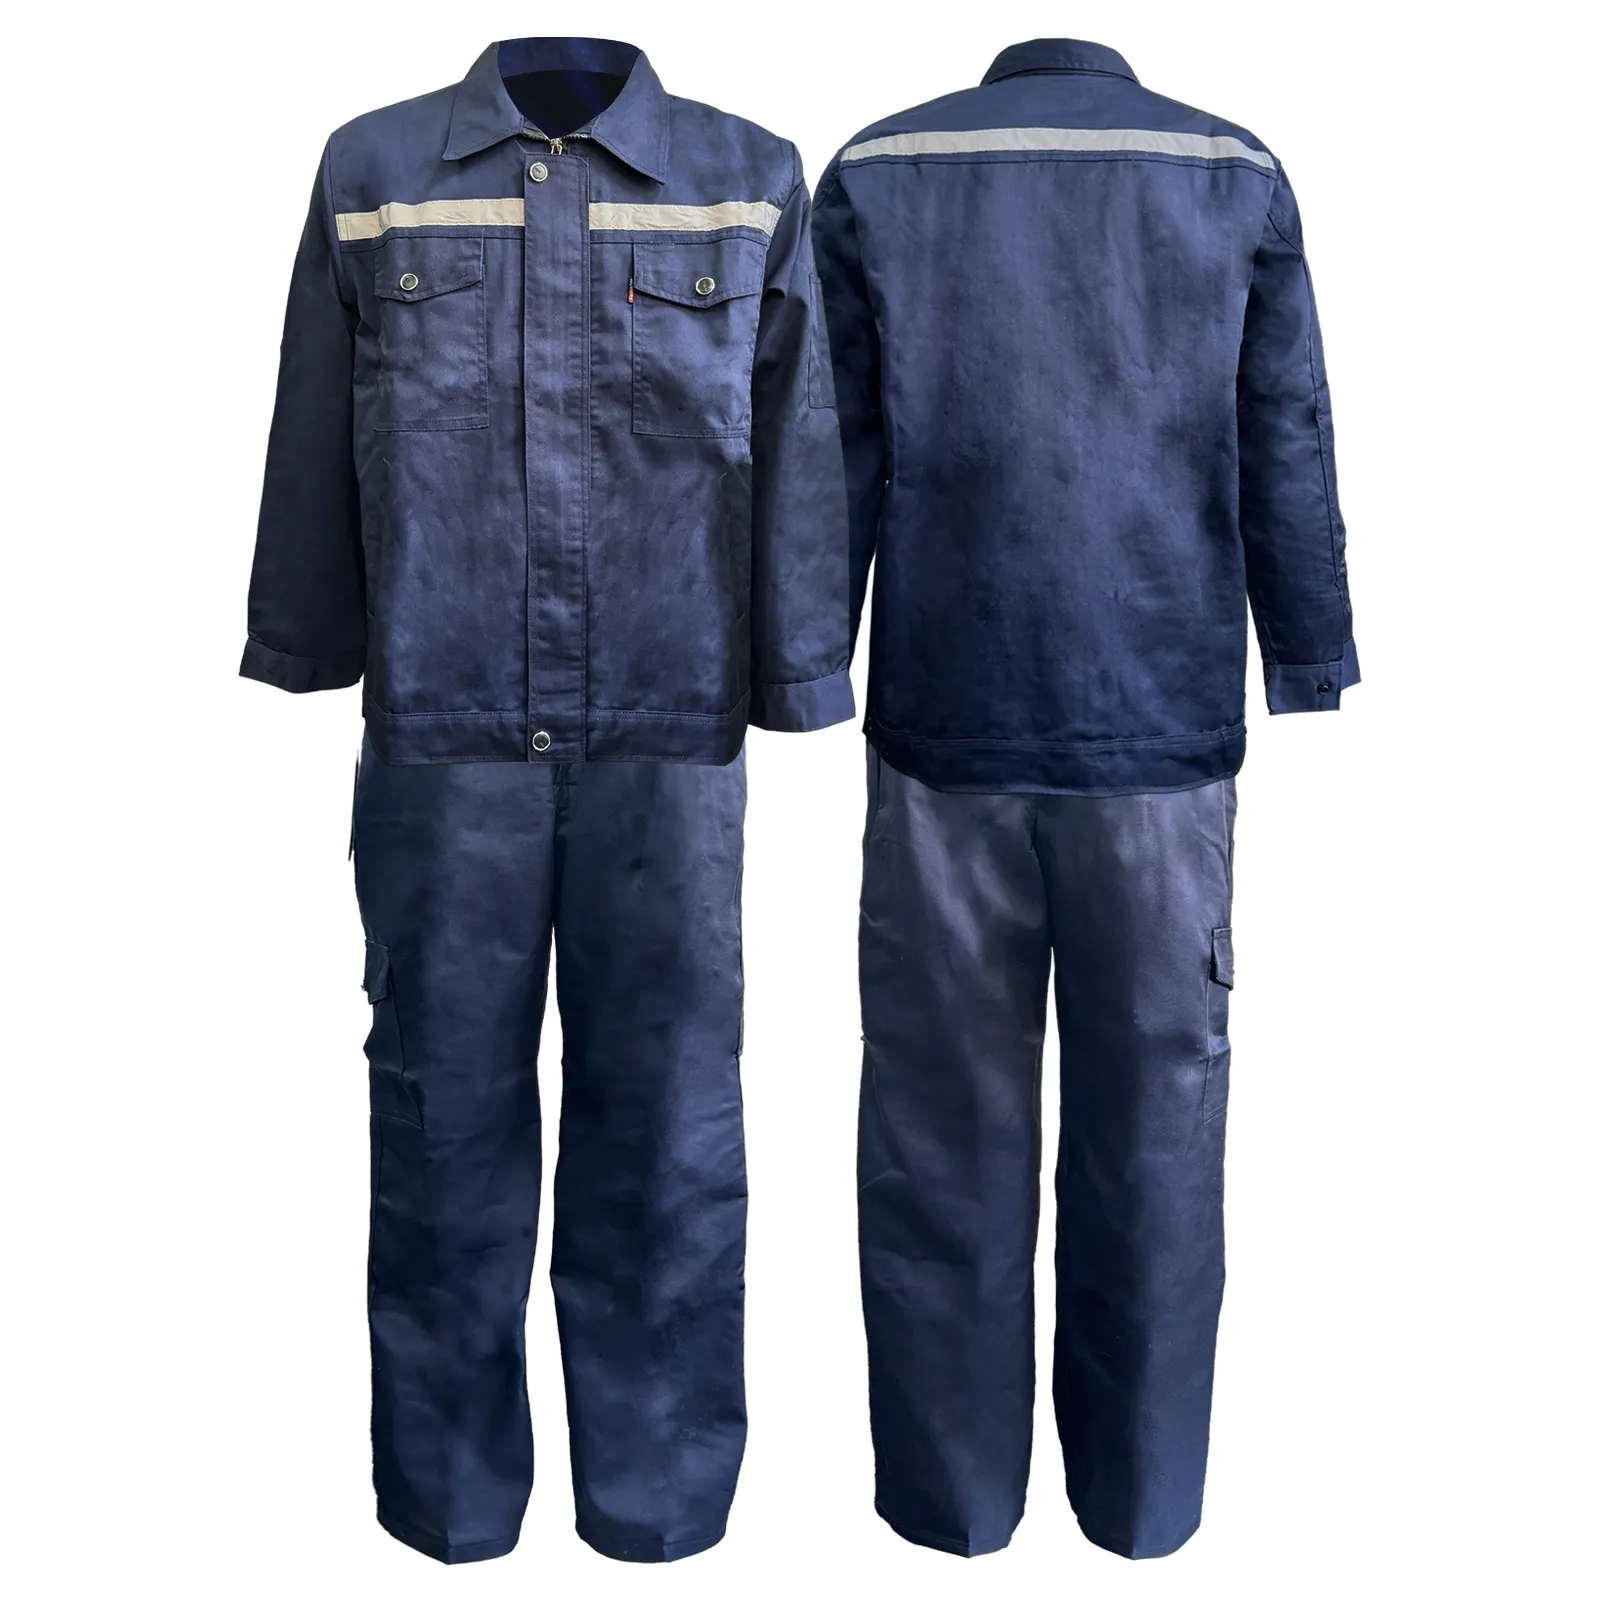 Workplace Safety Multiple Pockets Customized Reflective Jacket Safety Construction Workwear